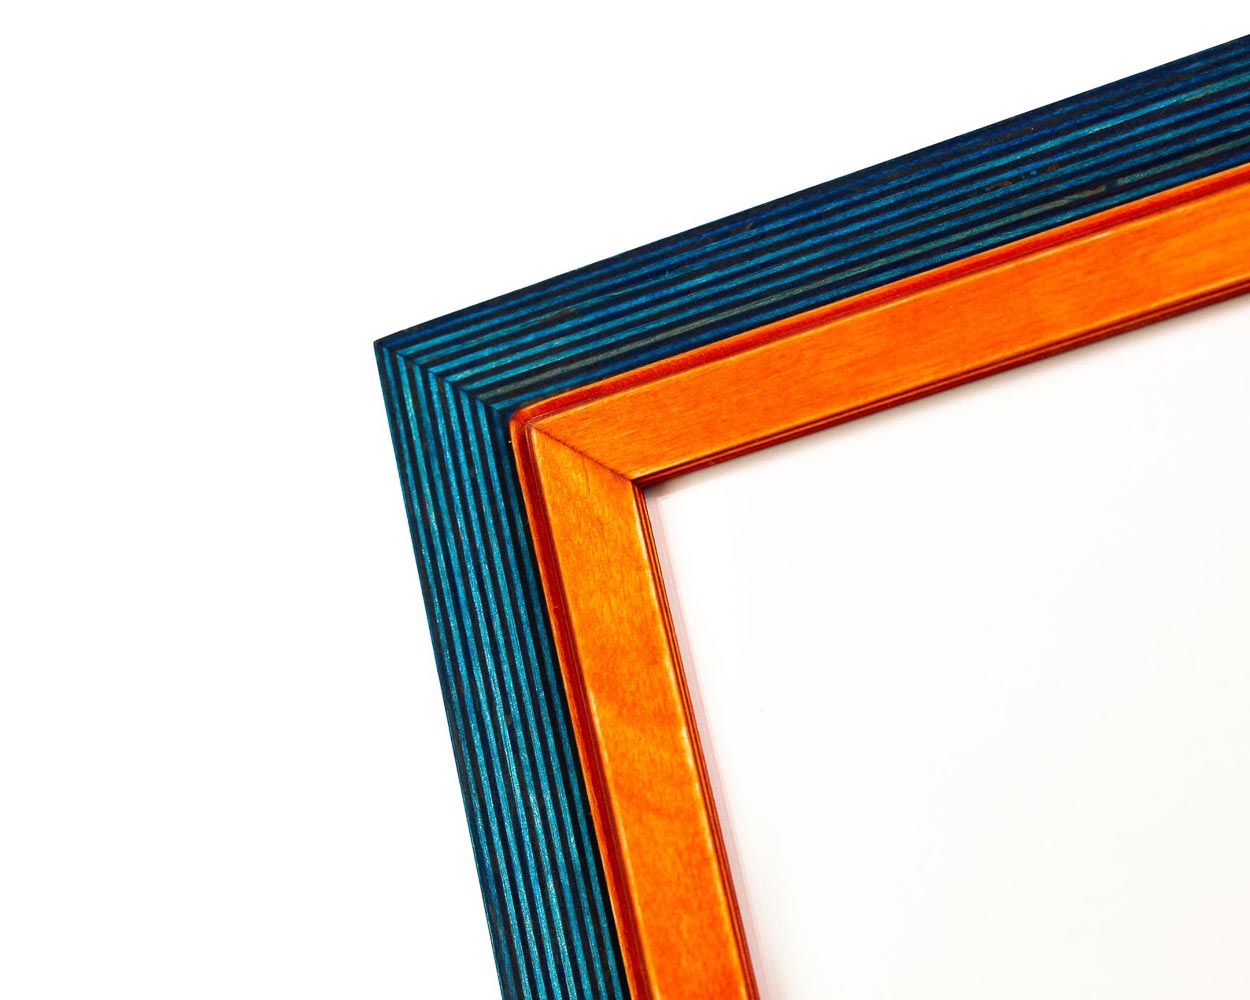 Double Green + Orange Photo Frame – EventFrame